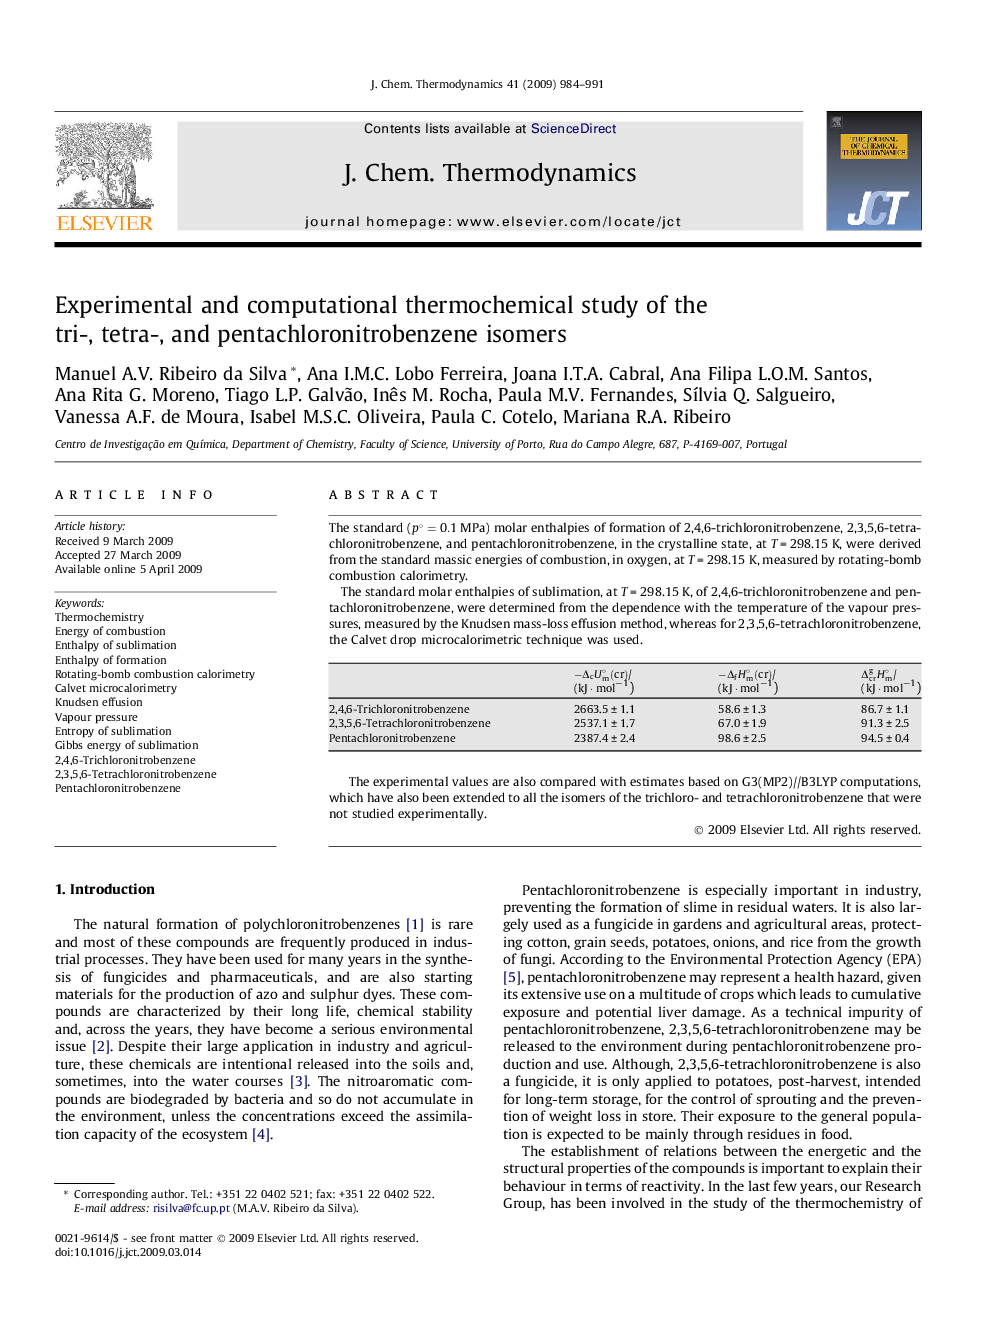 Experimental and computational thermochemical study of the tri-, tetra-, and pentachloronitrobenzene isomers